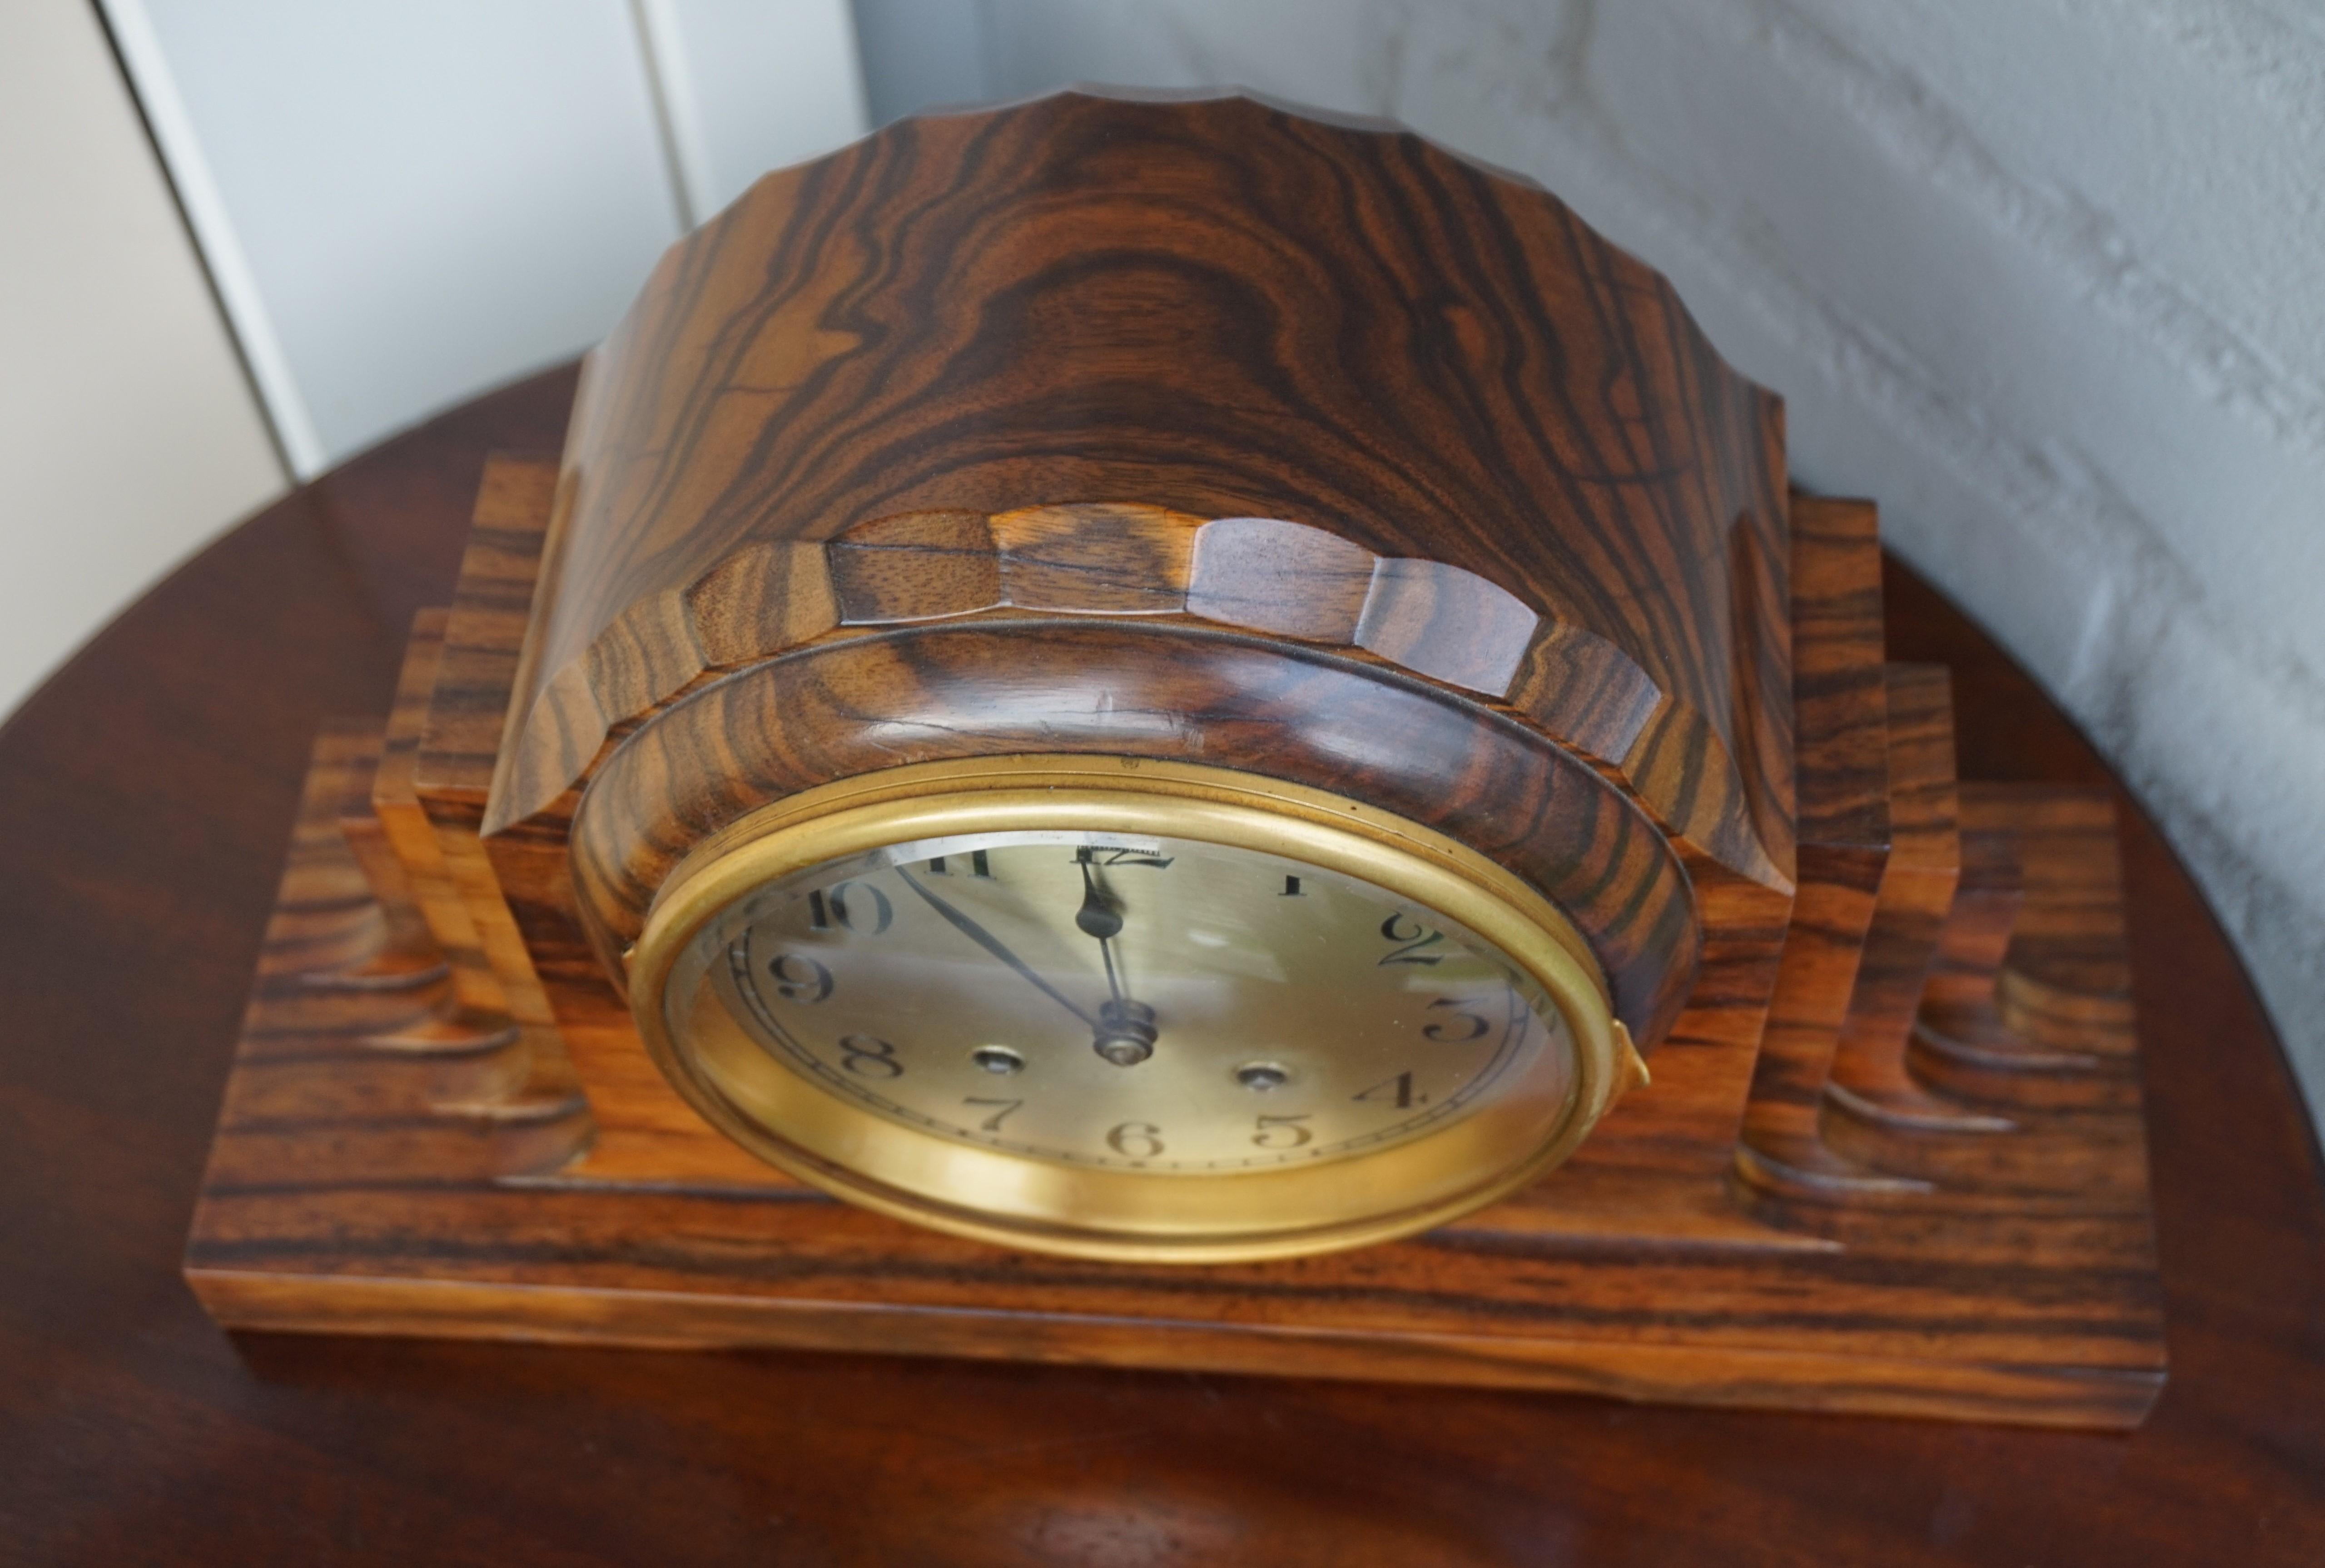 European Top Design 1920s Art Deco Mantel Clock Made of Solid Coromandel w. Beveled Glass For Sale